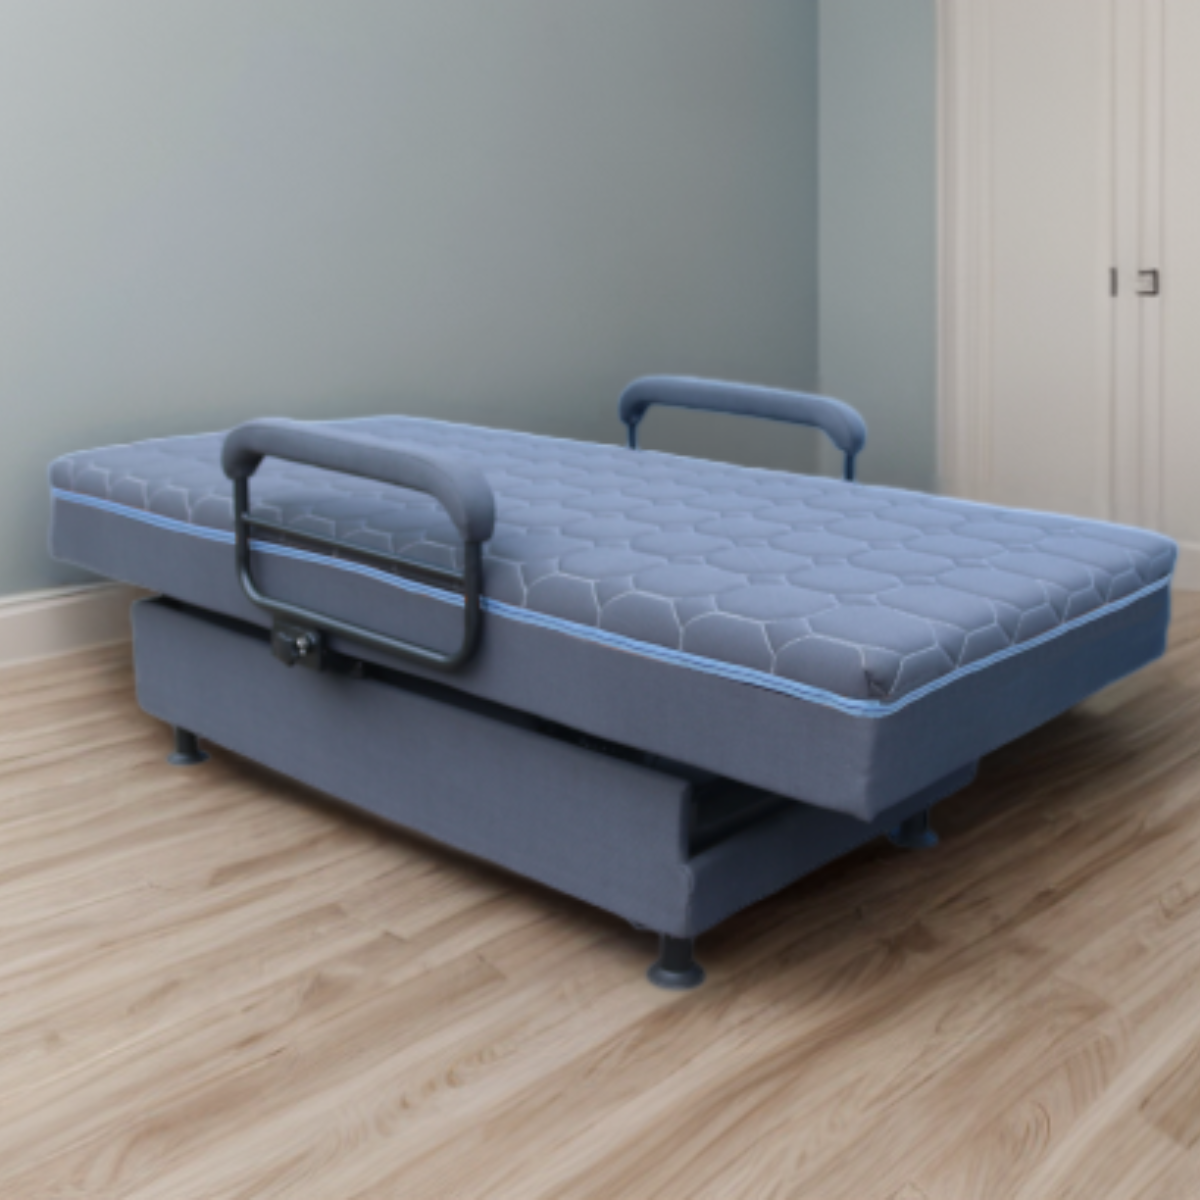 Komfort Sleep To Stand Adjustable Bed